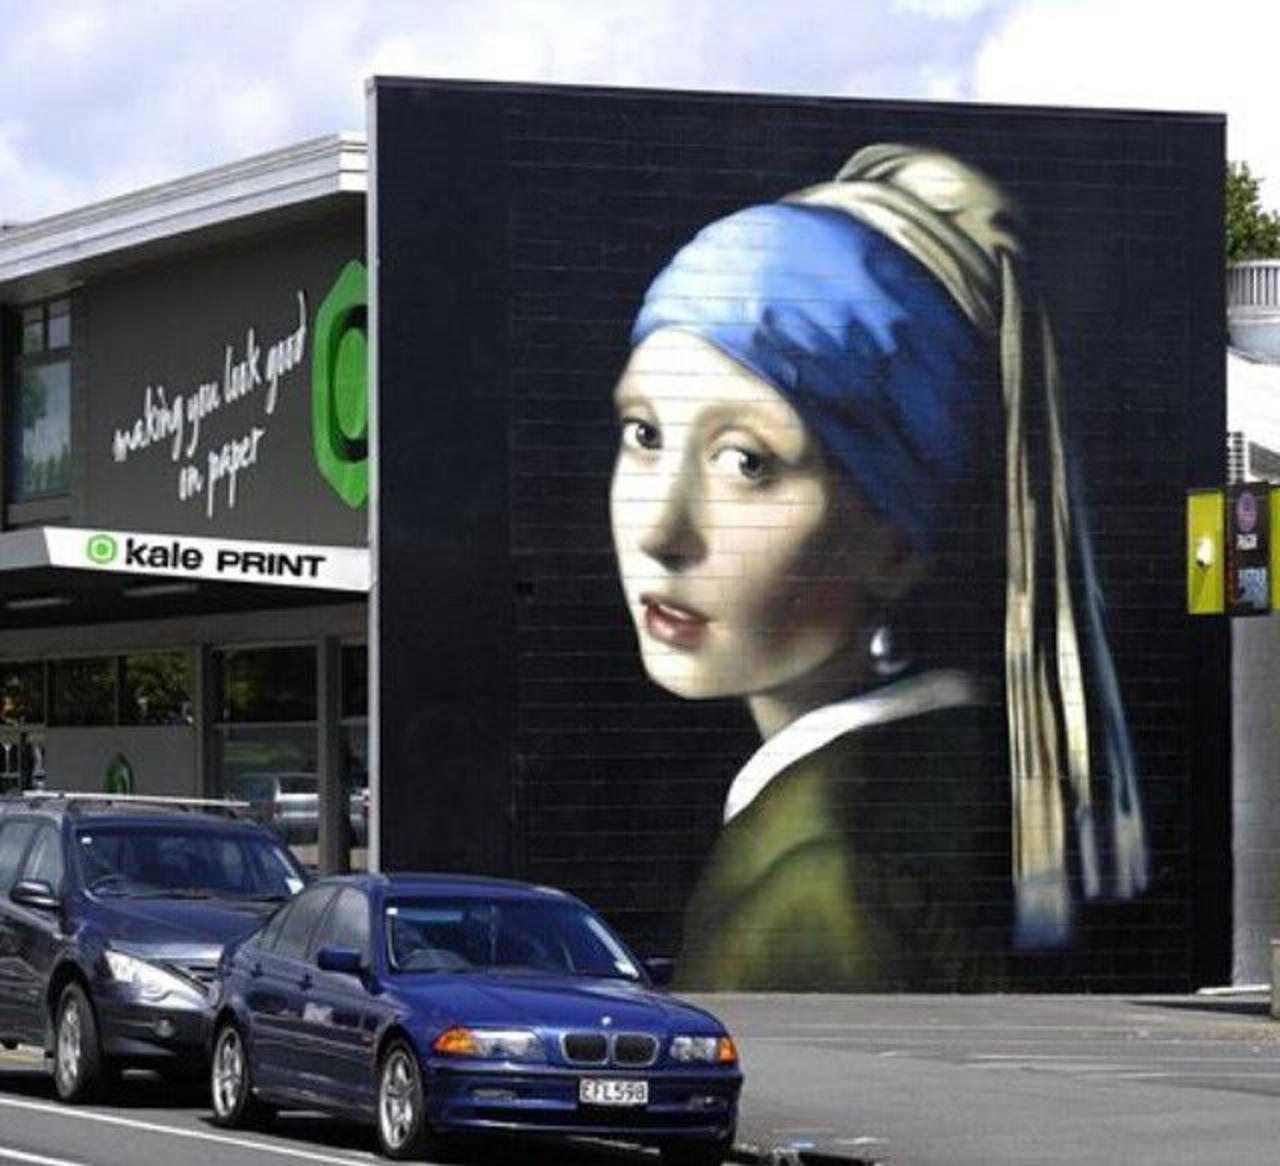 The Girl with the Pearl Earring Street Art by Owen Dippie in New Zealand 

#art #arte #graffiti #streetart http://t.co/mjARalqlEd